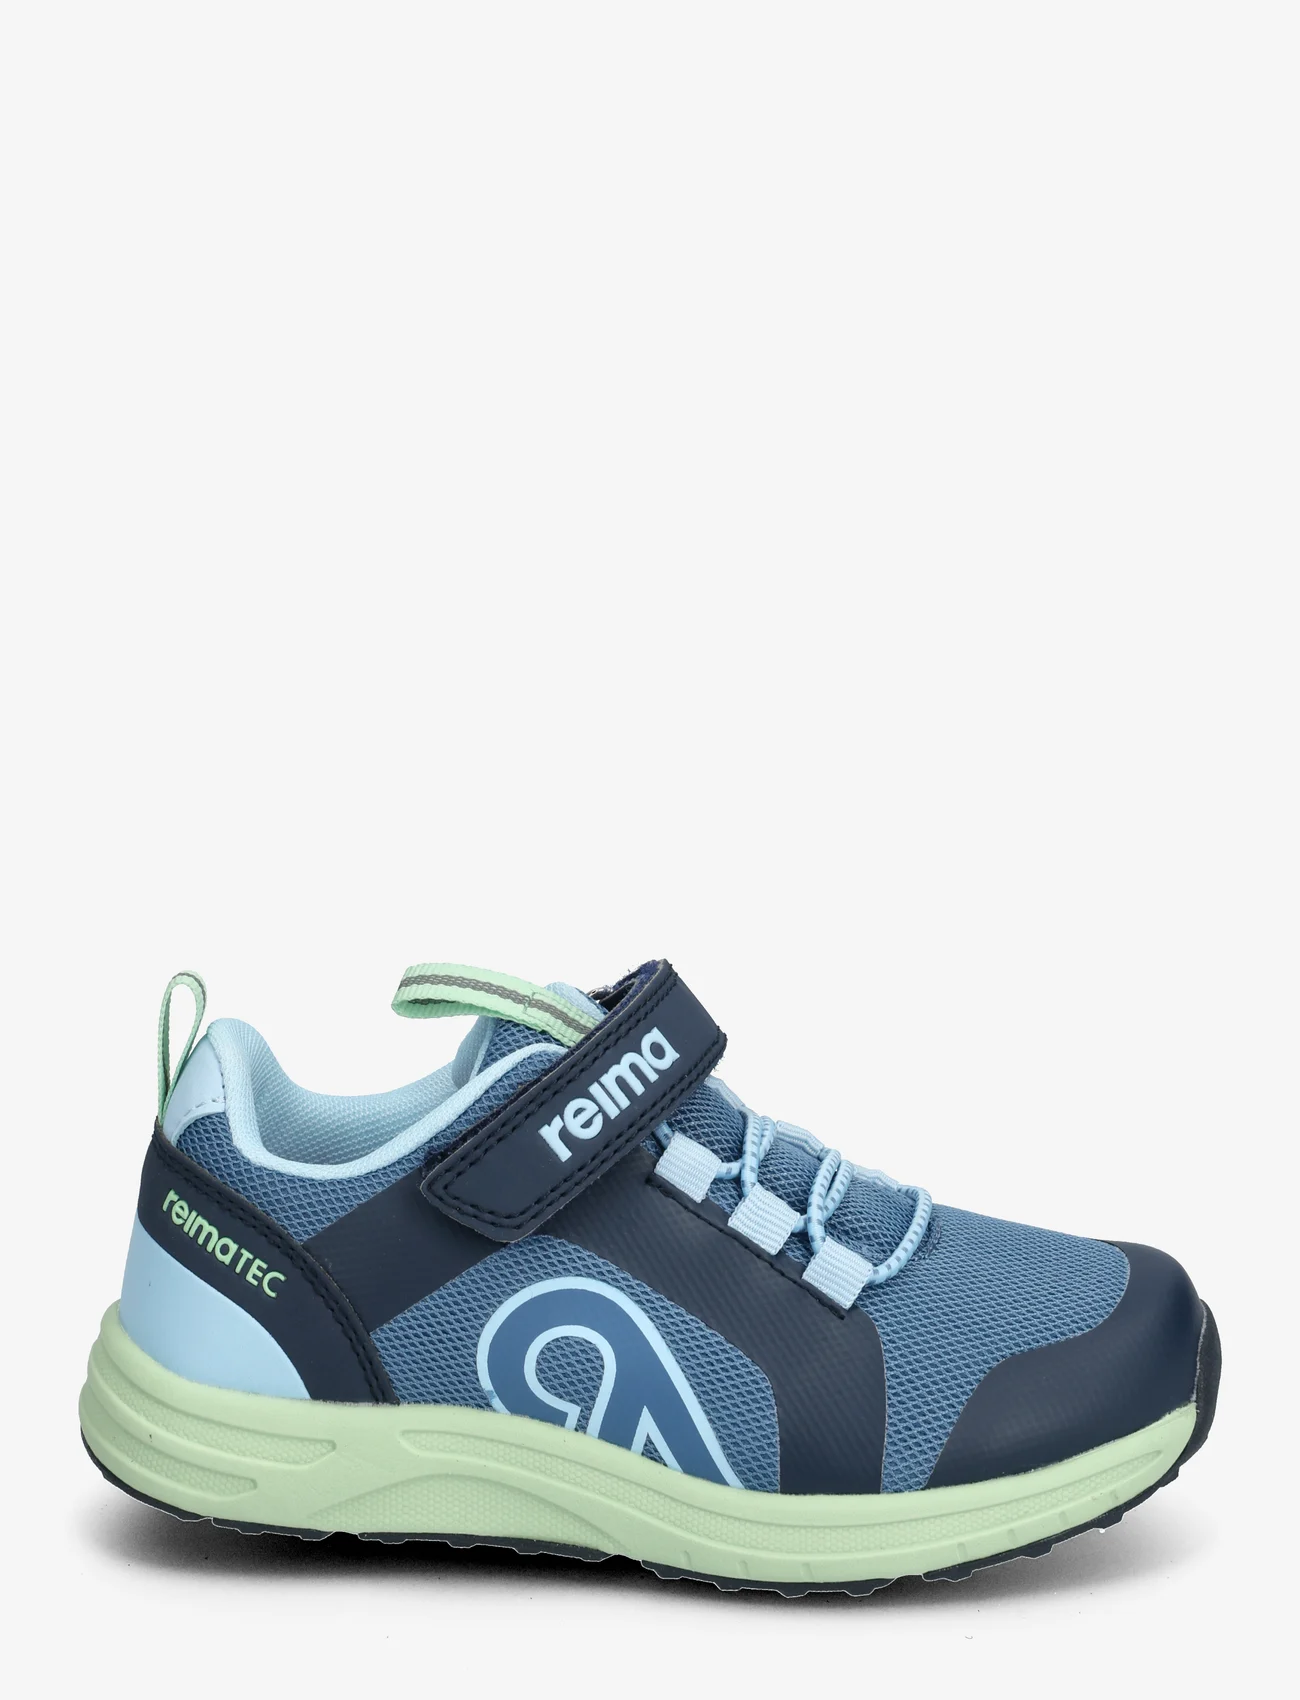 Reima - Reimatec shoes, Enkka - barn - blue ocean - 1